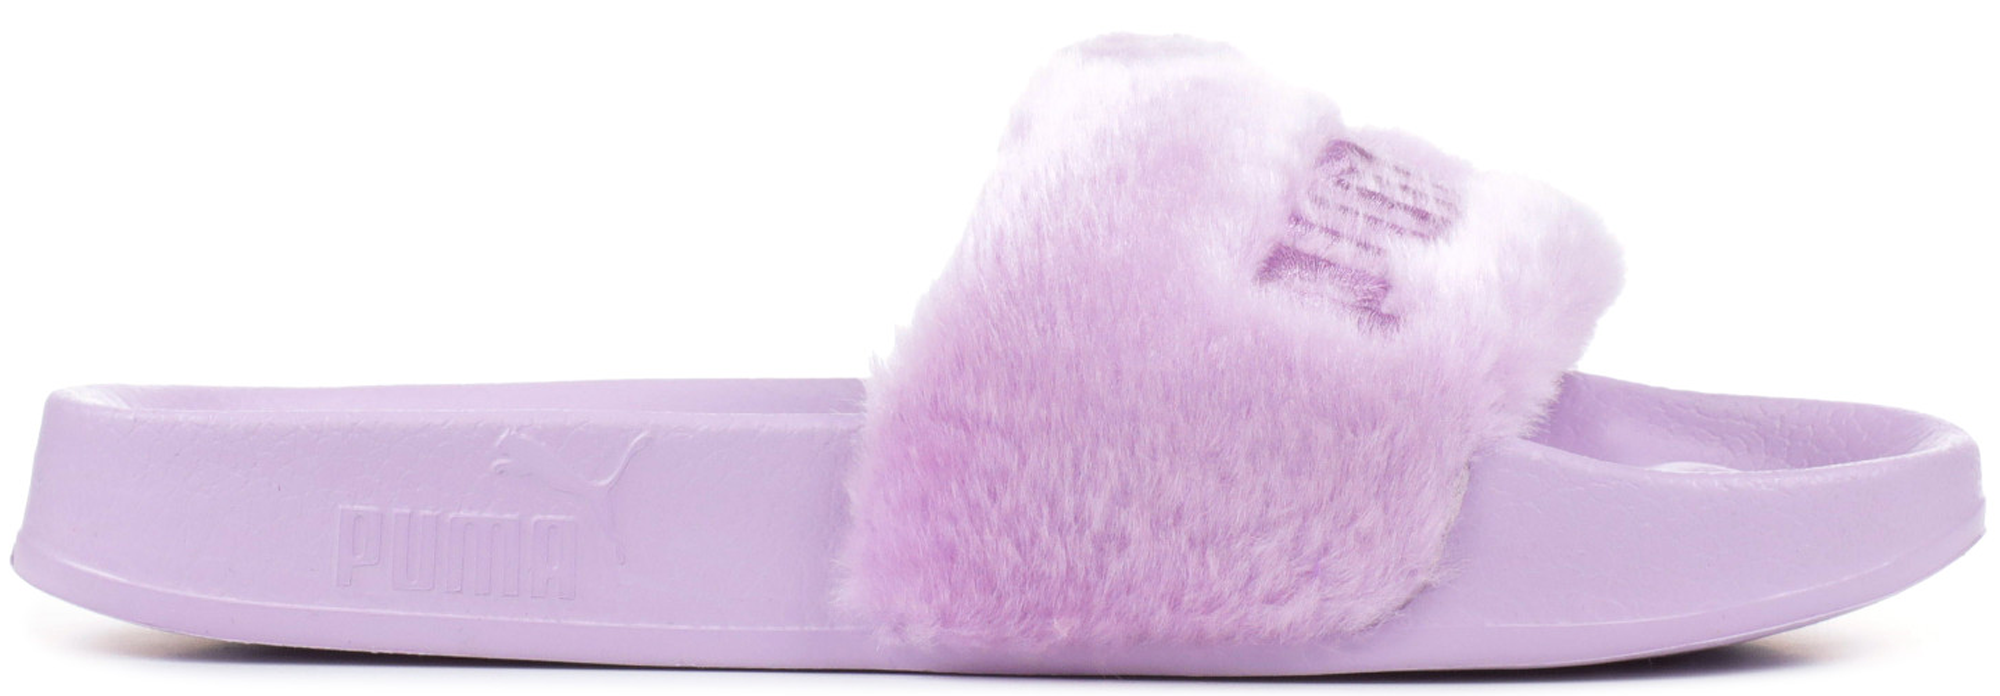 puma fenty pink fur slides